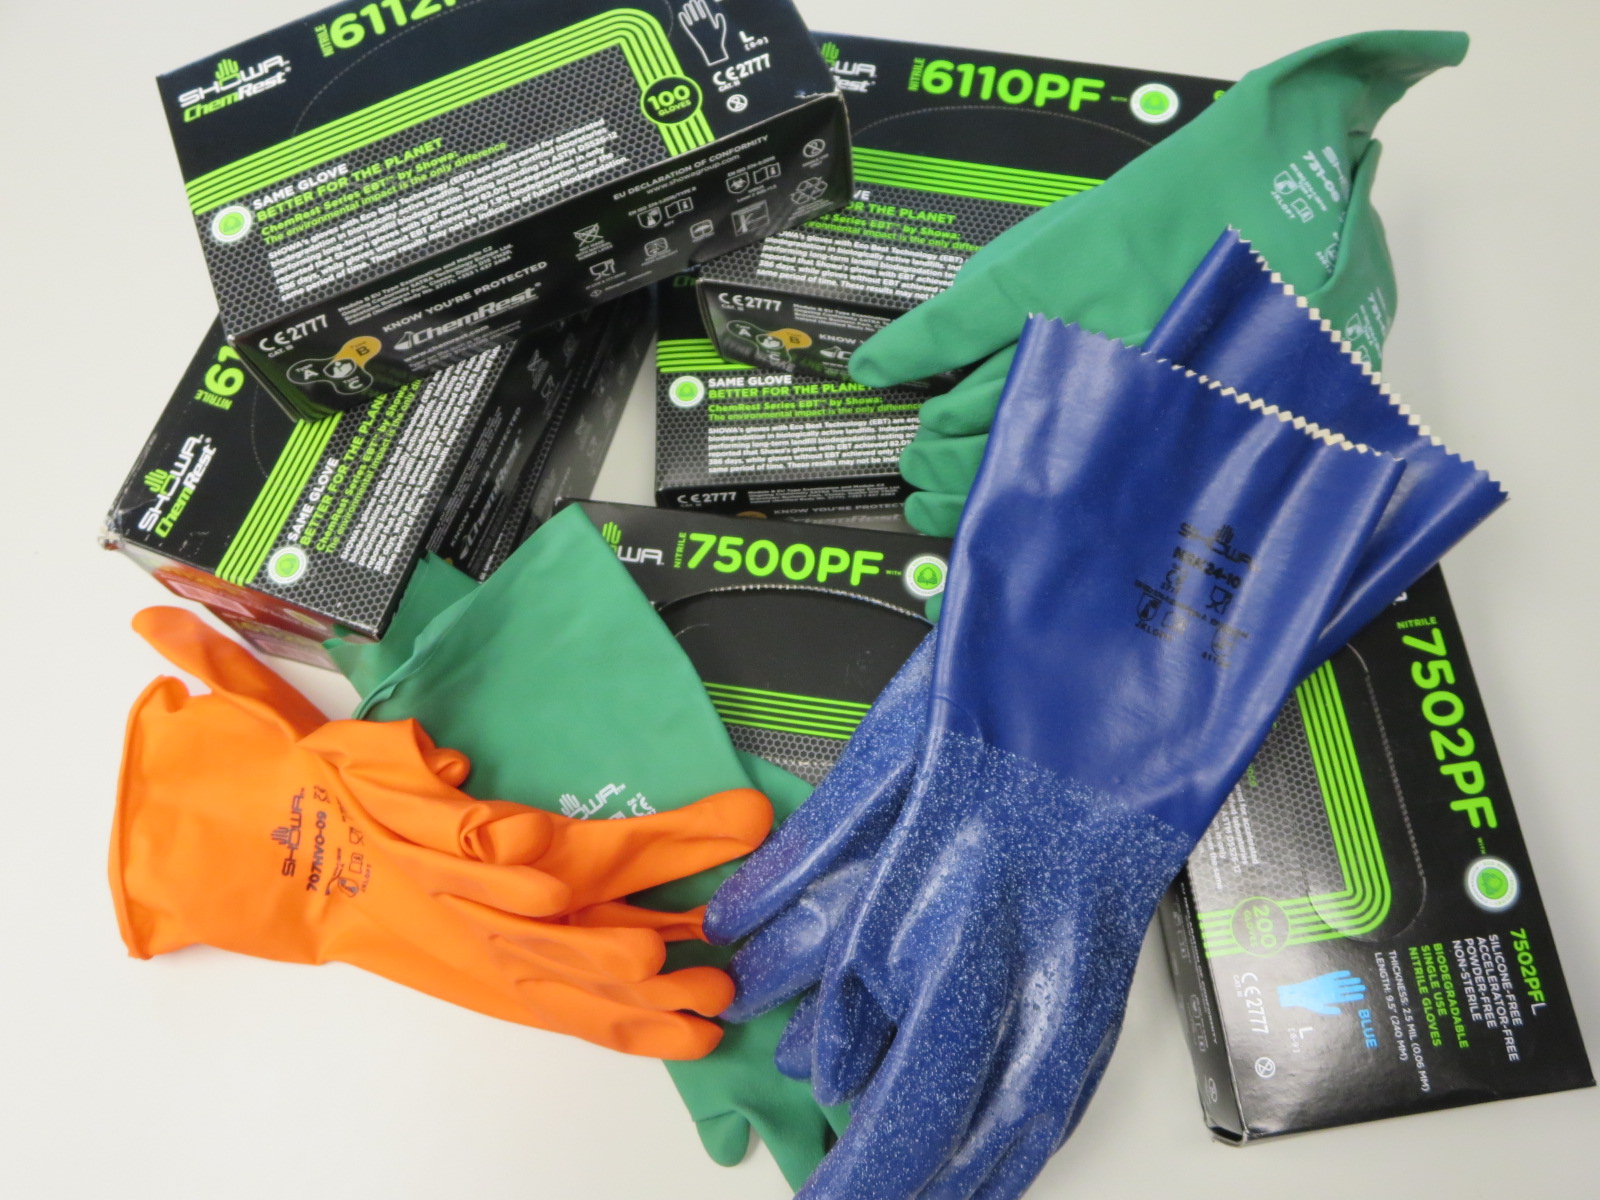 Showa Green-DEX Biodgradable Nitrile Gloves